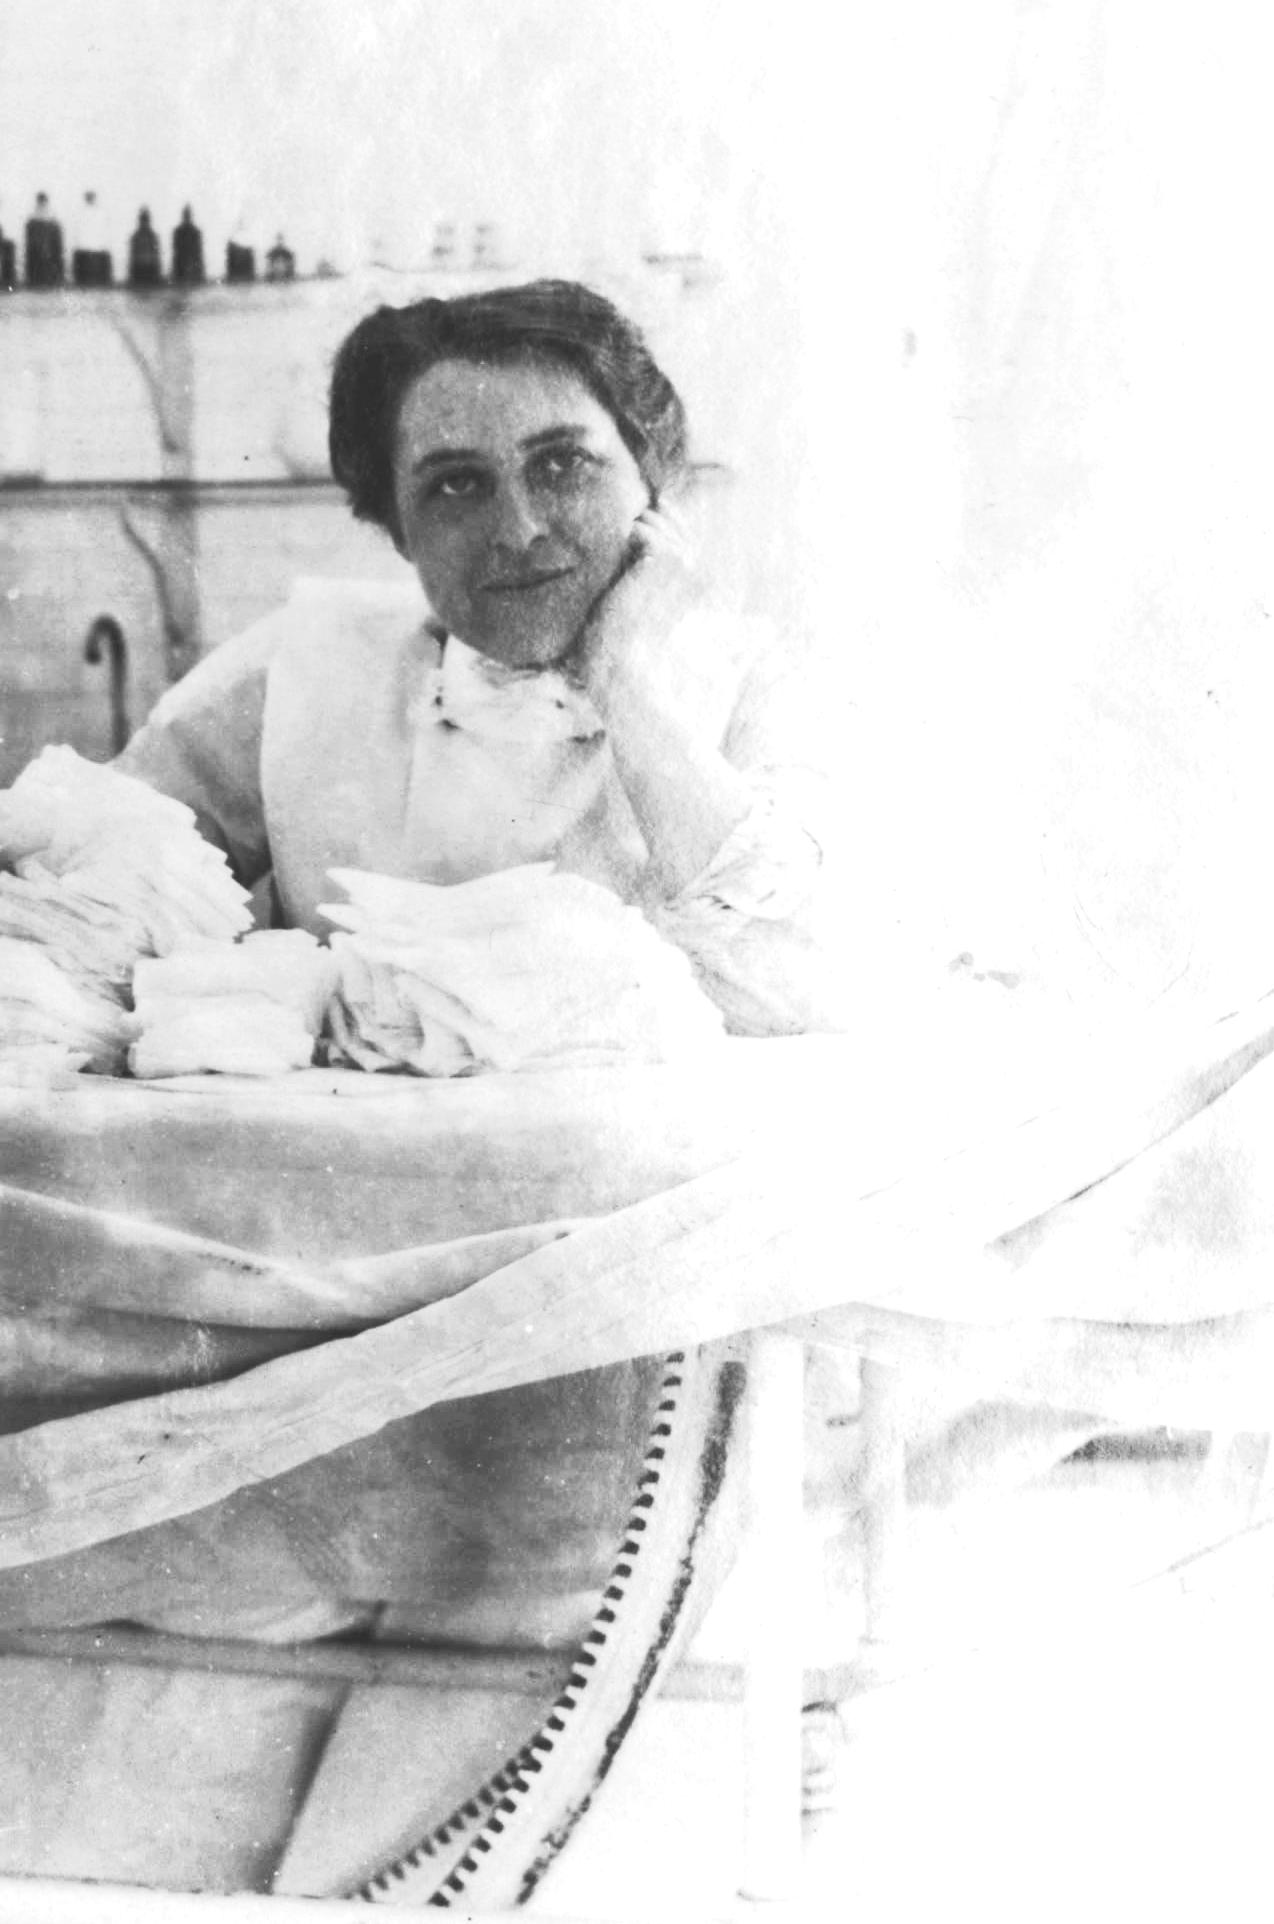 Nurse Clementina Marshall 1914, SMILING, as she folds bandages at Sydney hospital about 1914 aged 35